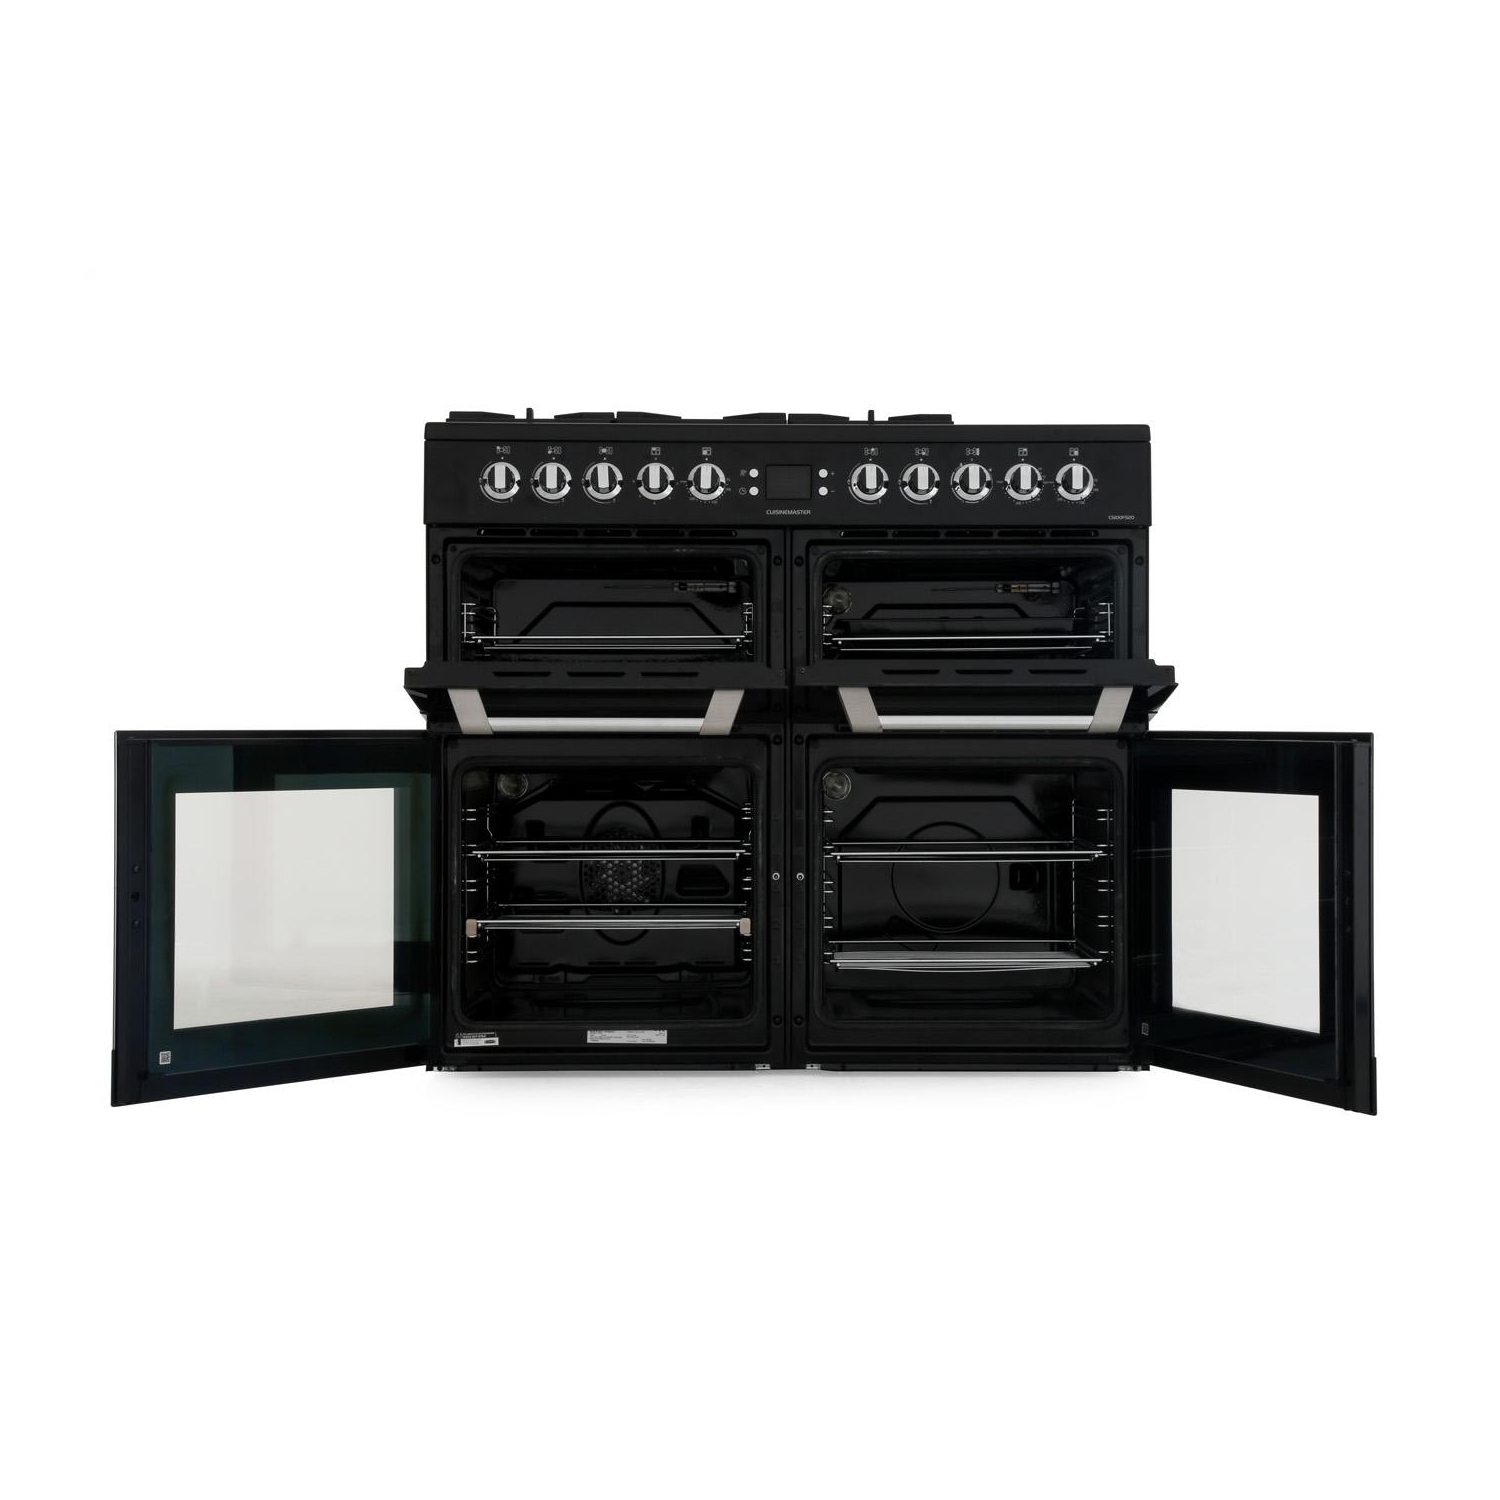 Leisure Cuisinemaster CS100F520K 100cm Dual Fuel Range Cooker - 3